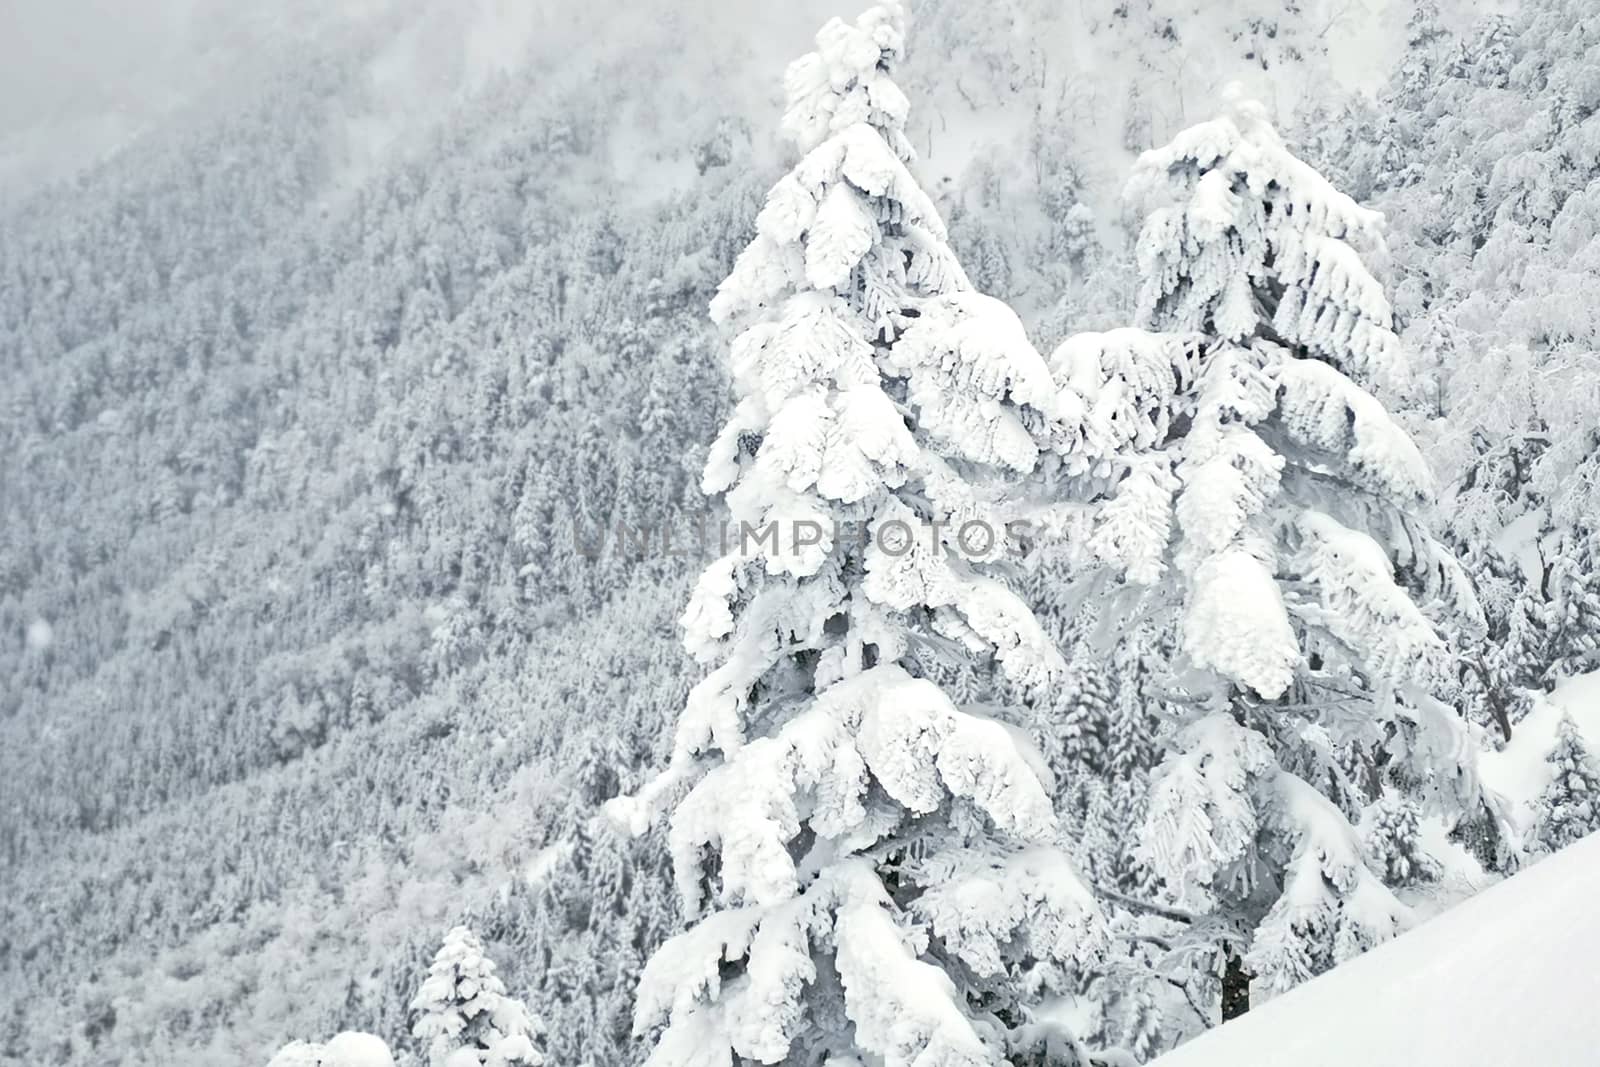 Natural snow hill and tree in Japan Yatsugatake mountains
 by cougarsan